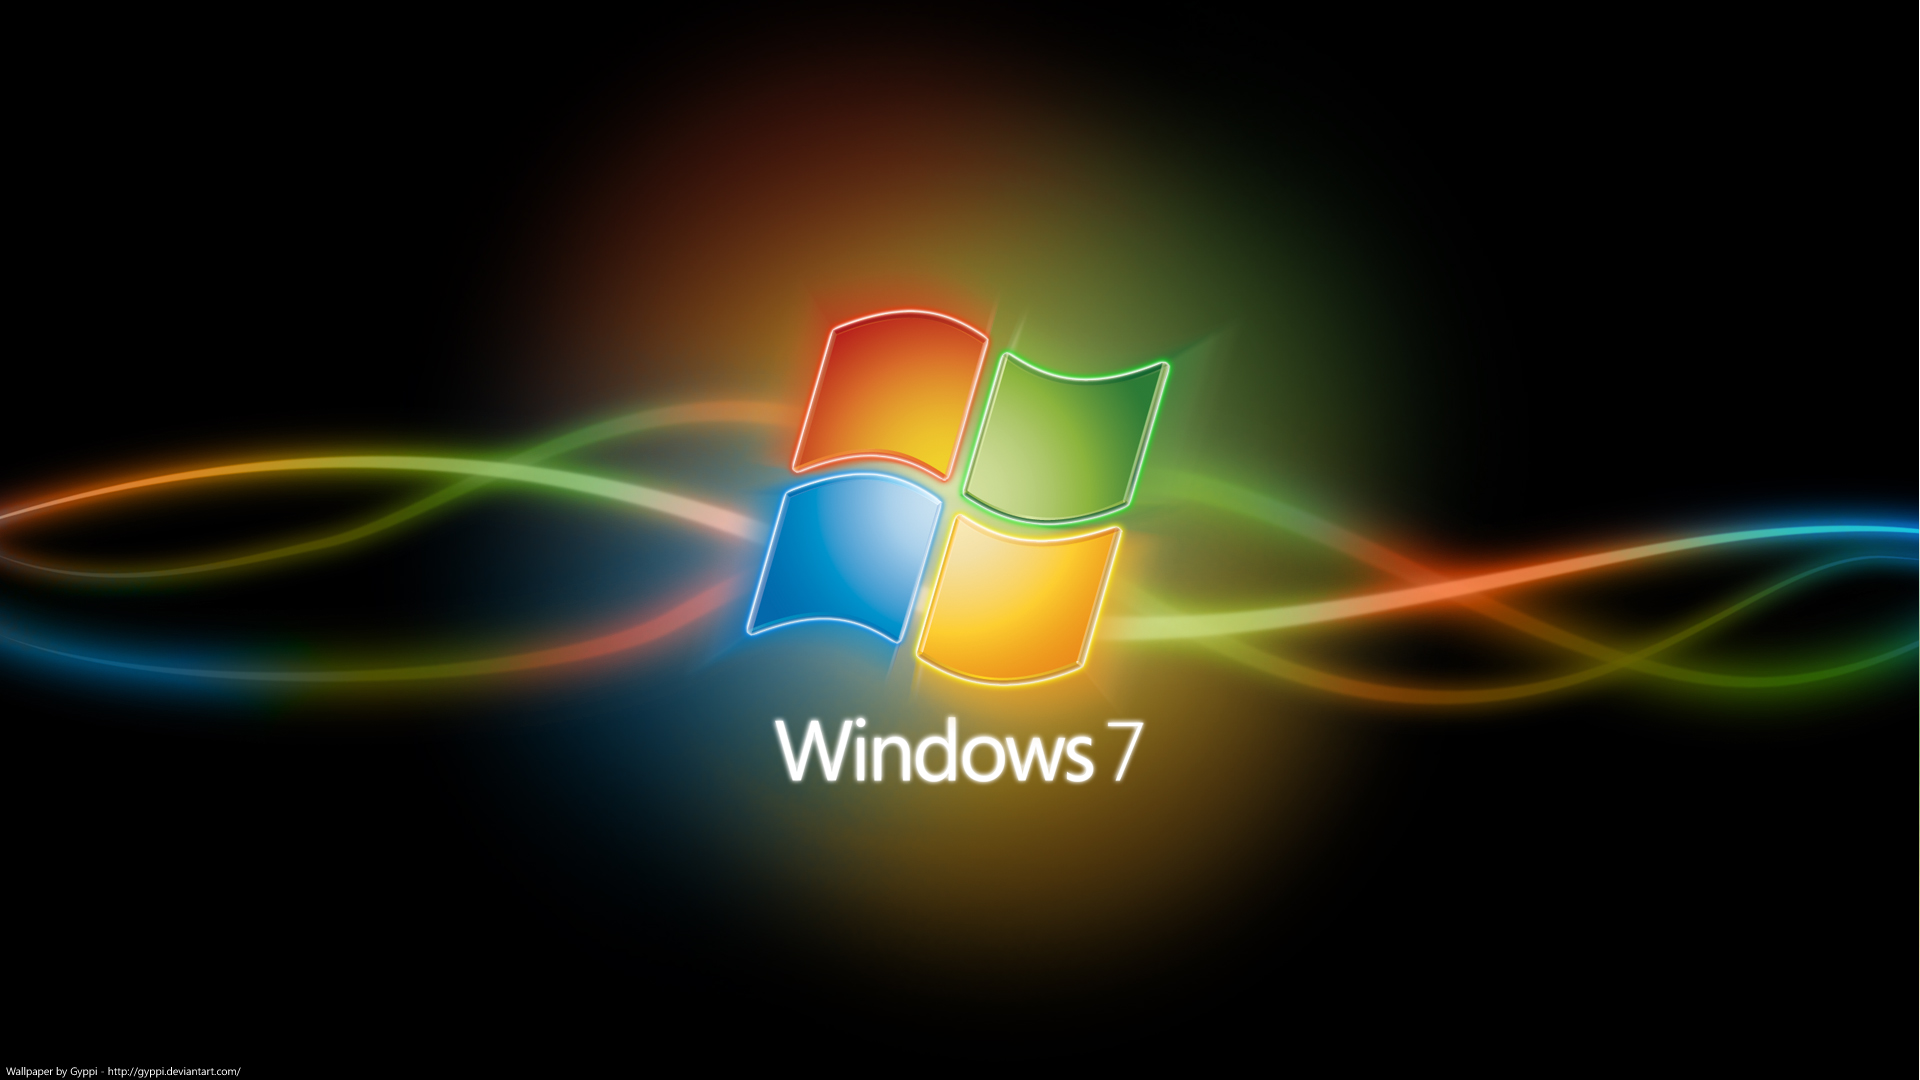 Windows 7 ultimate oem activation